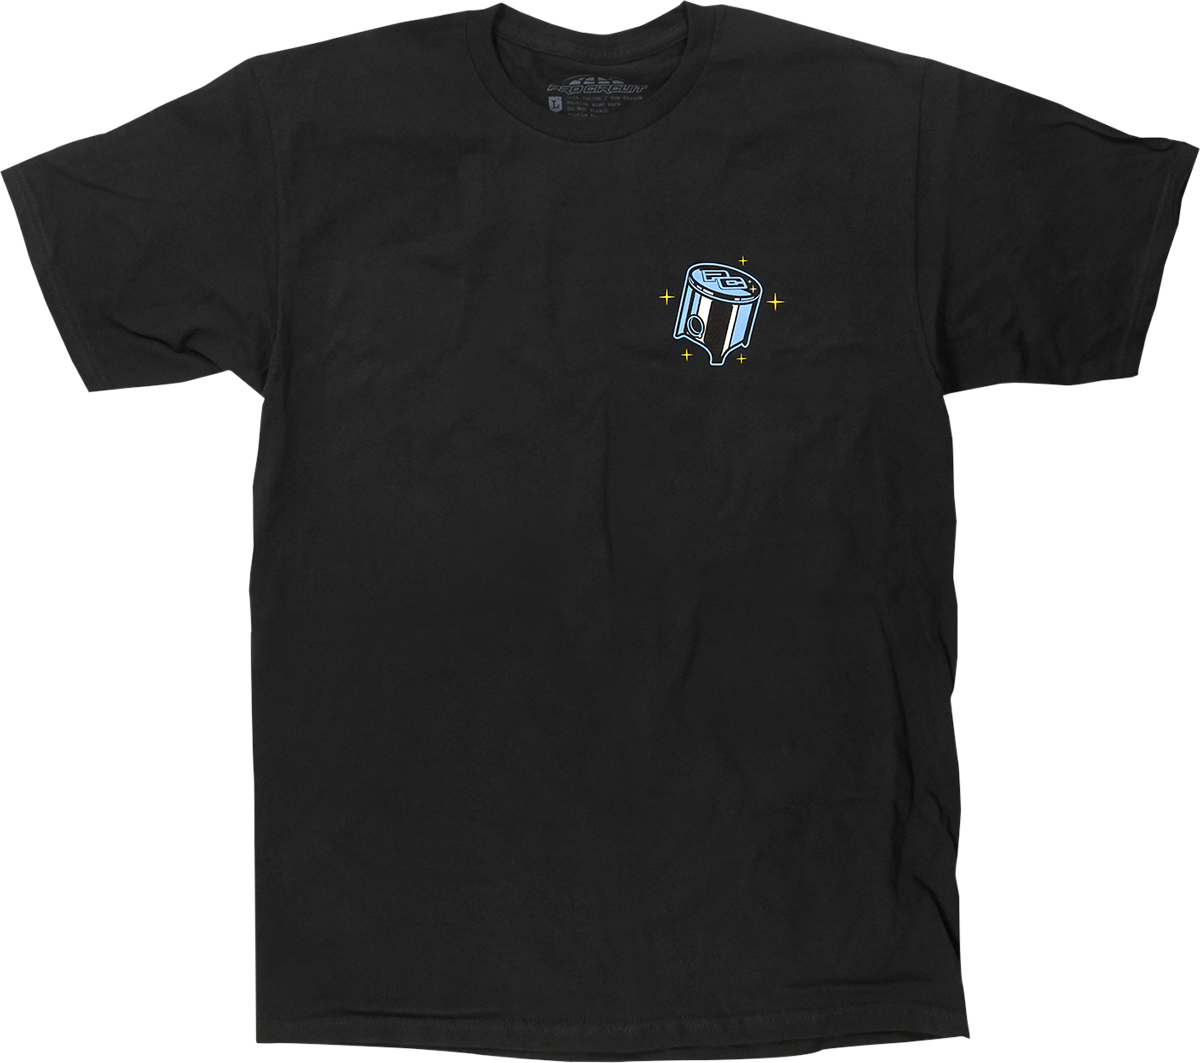 PRO CIRCUIT Piston T-Shirt - Black - XL 6431740-040